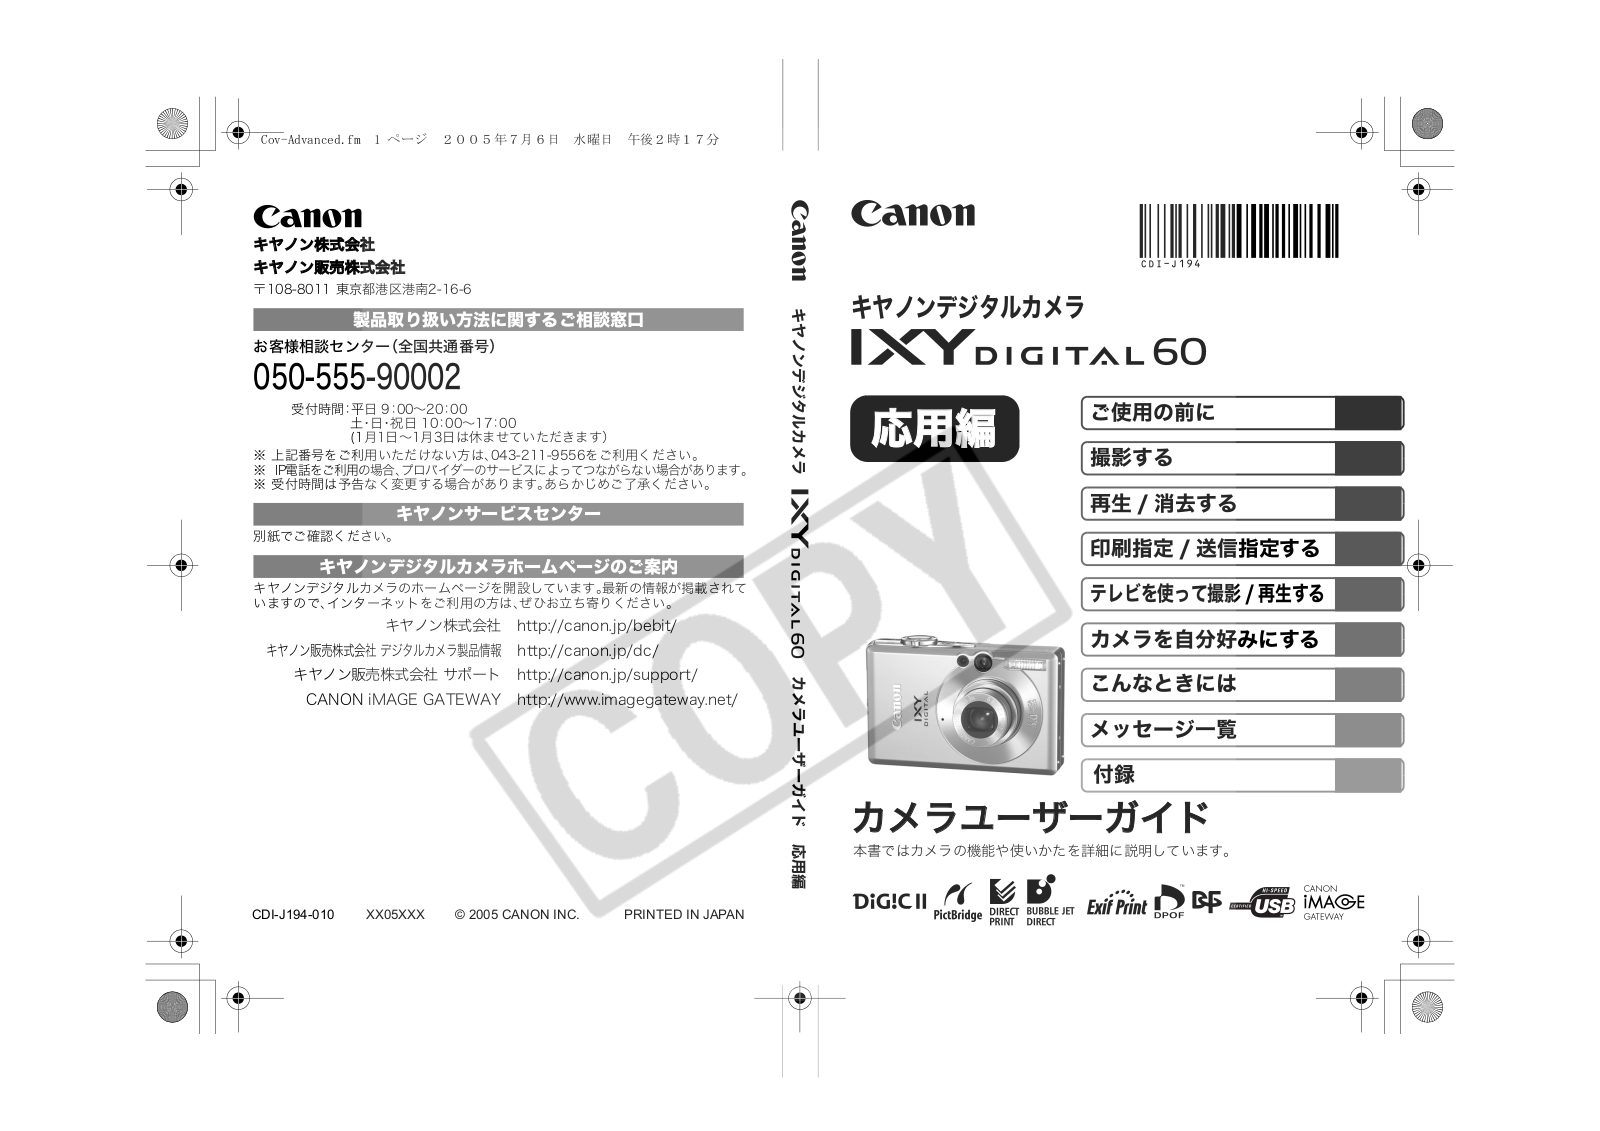 Canon IXY DIGITAL 60 User Manual